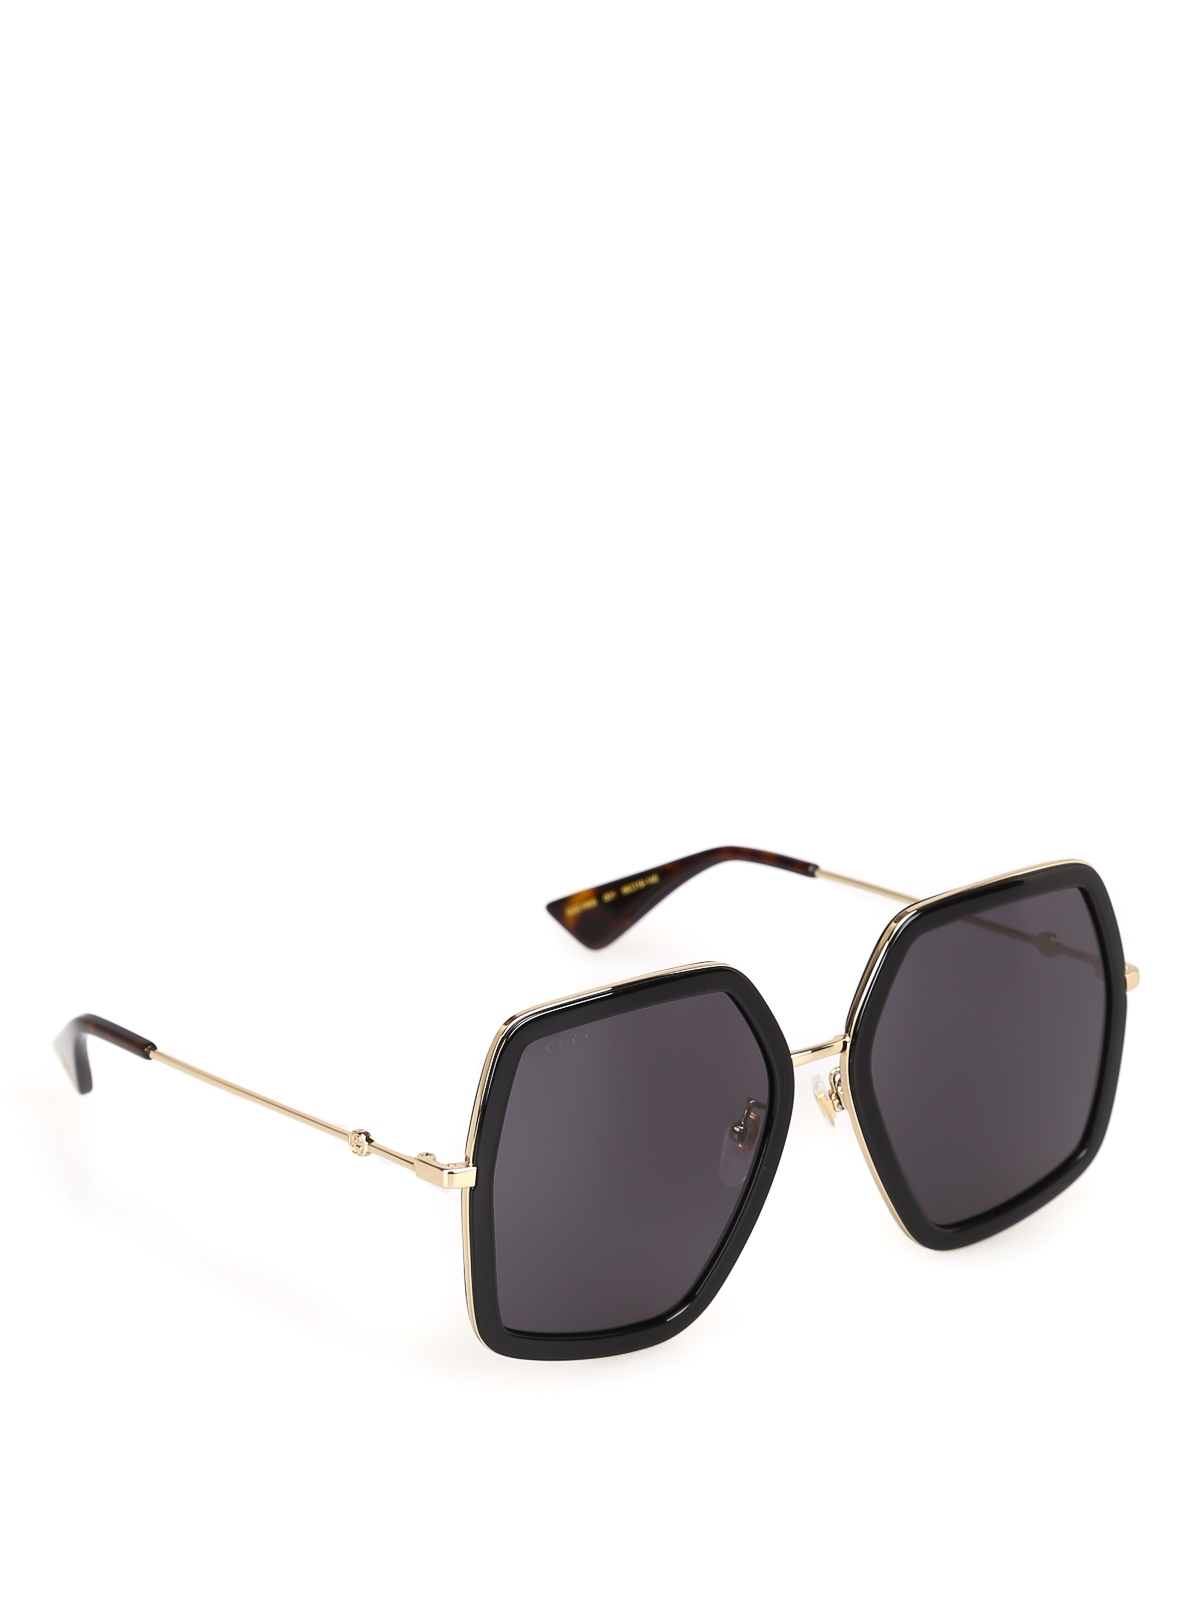 Gucci - Black and gold over sunglasses 